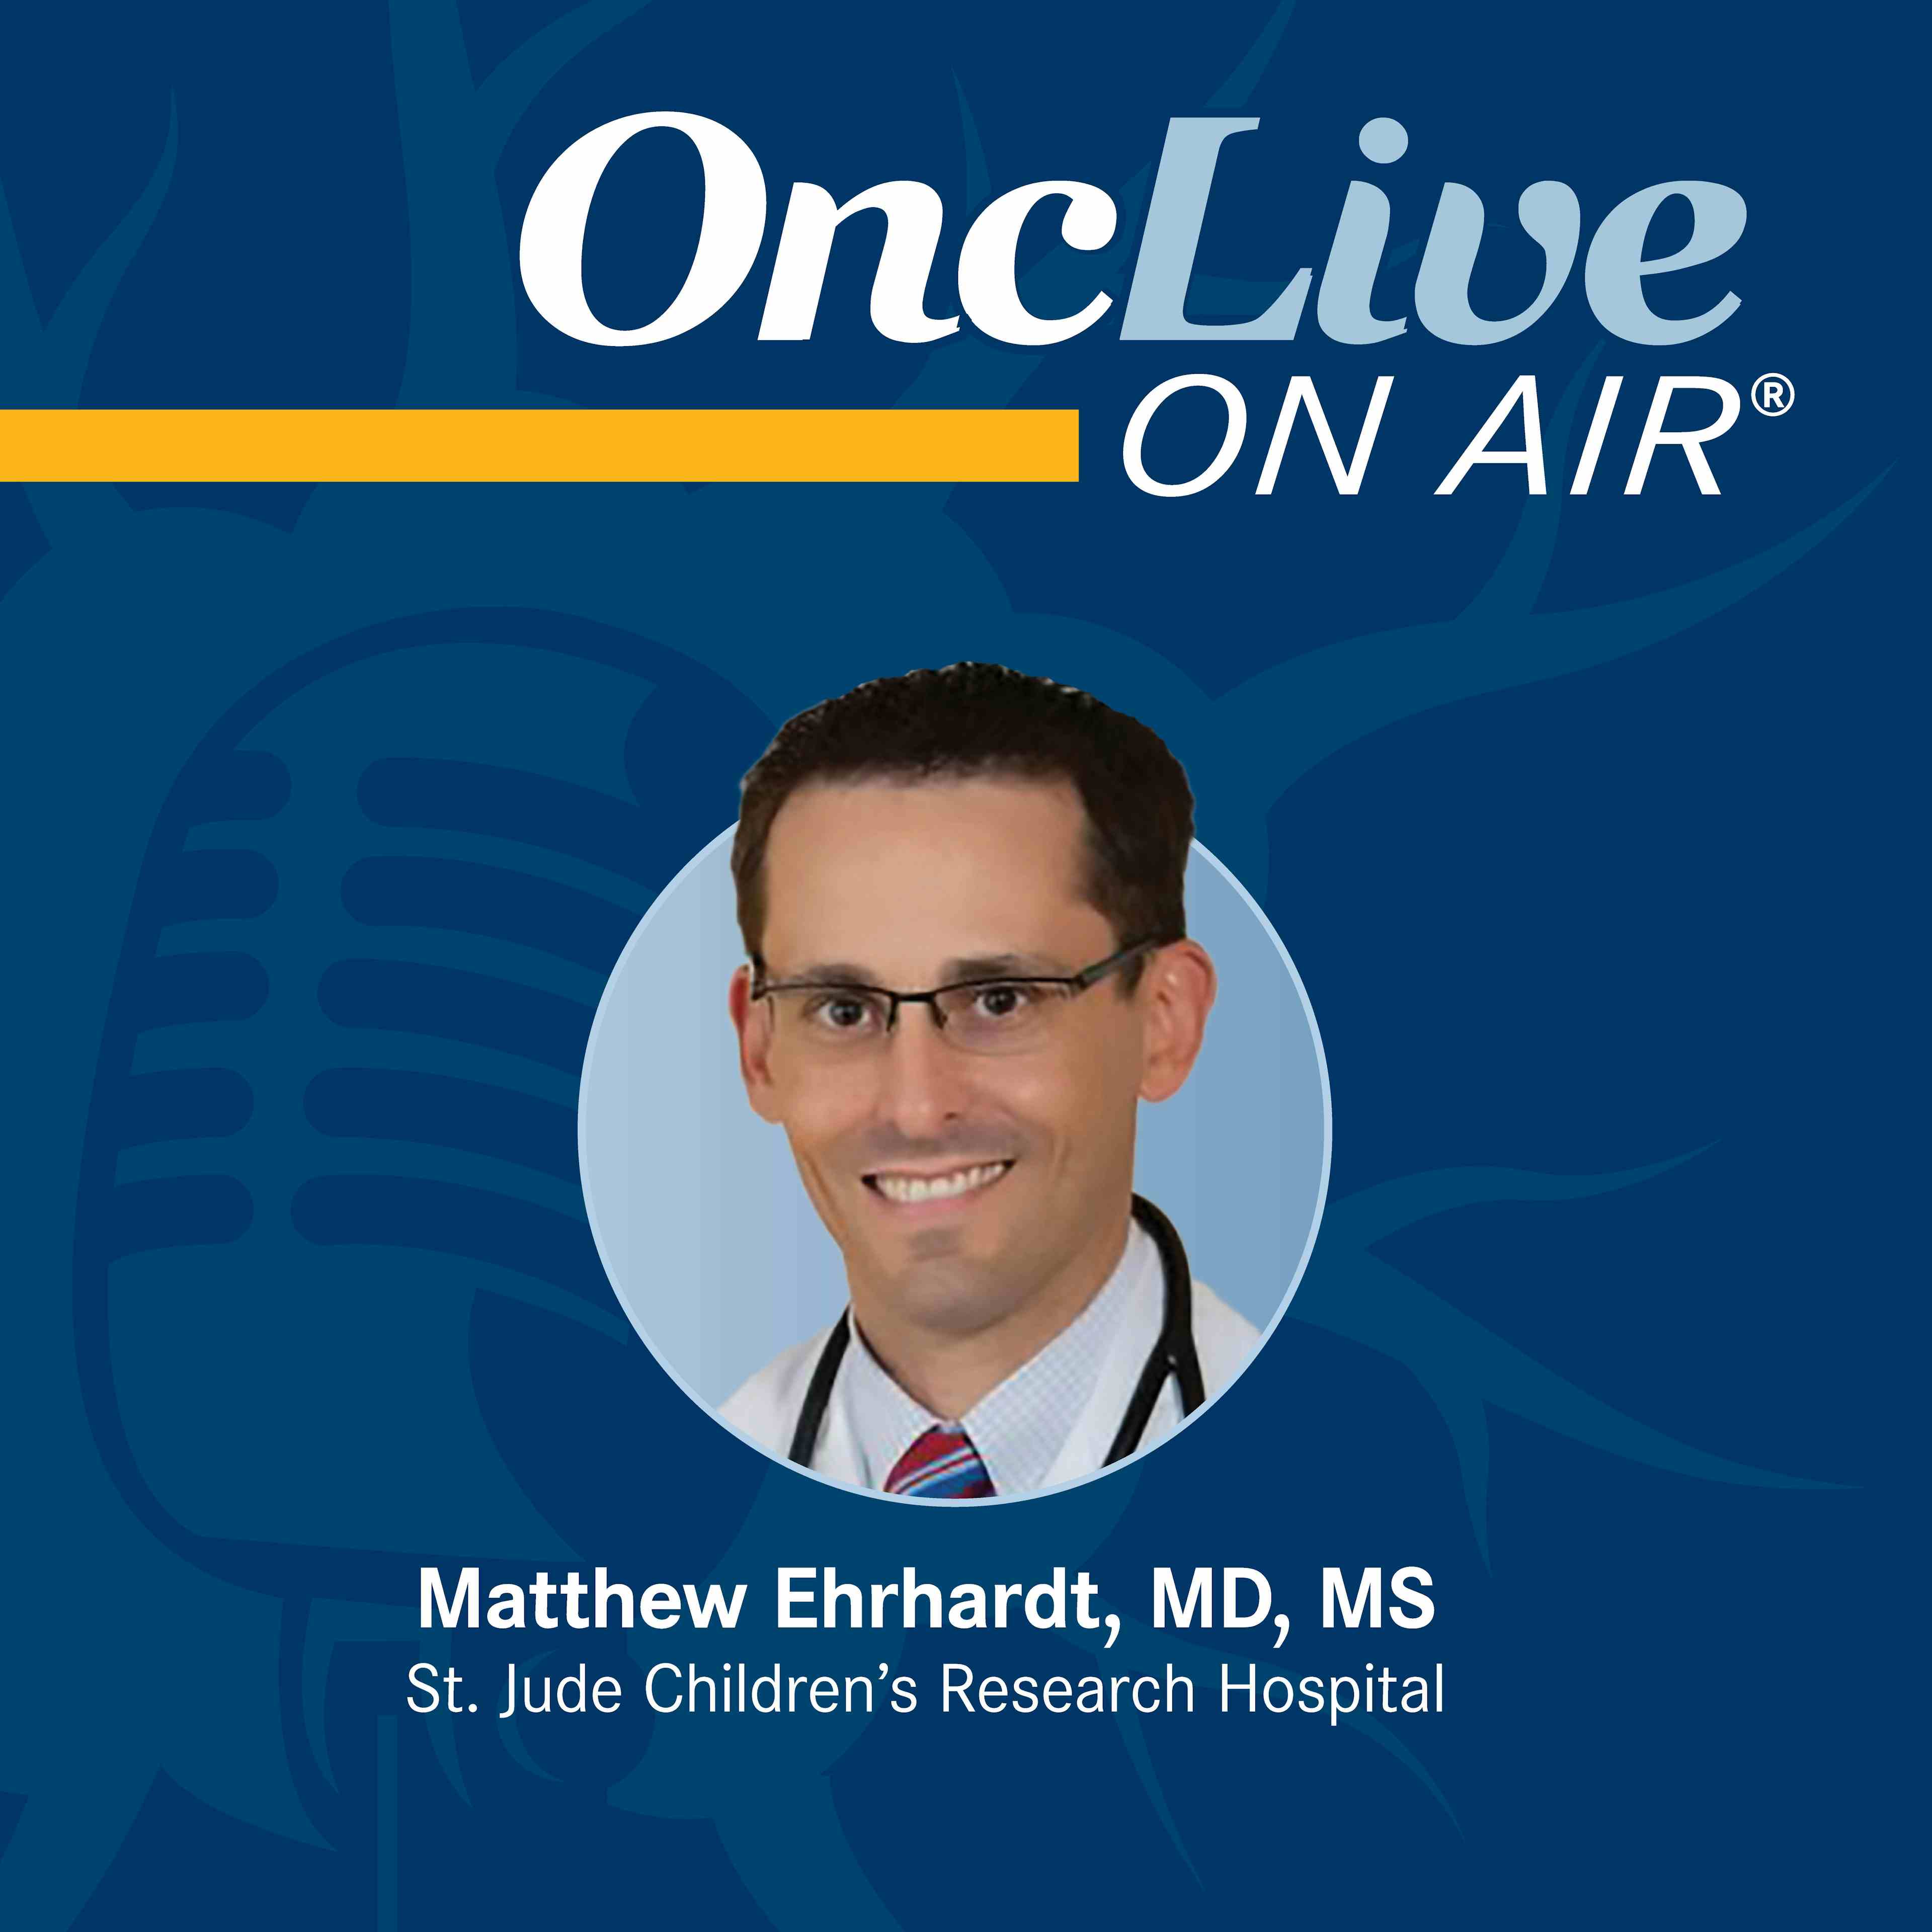 Matthew Ehrhardt, MD, MS